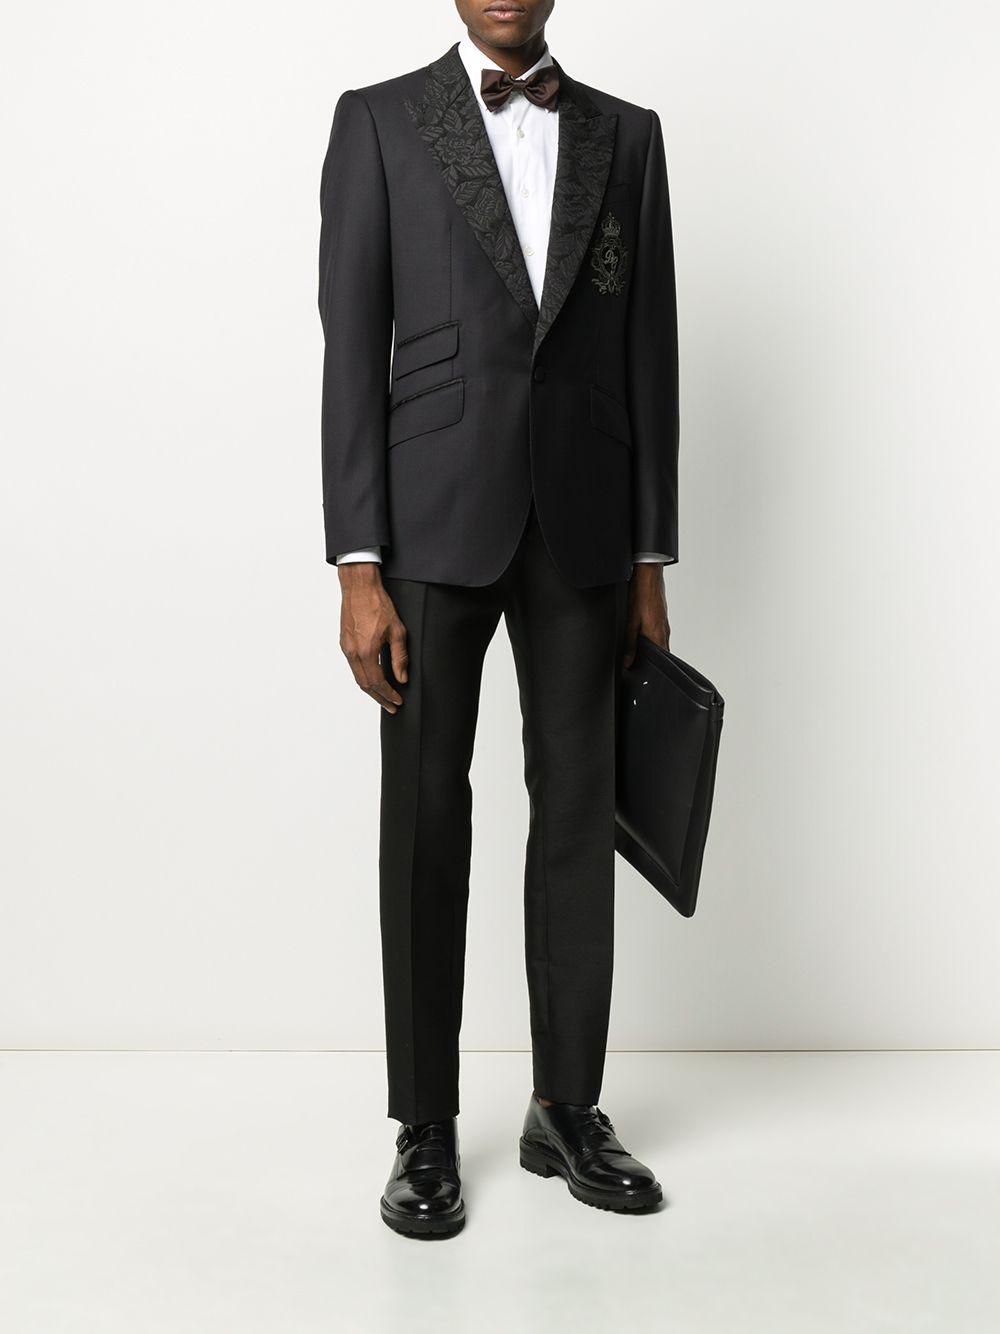 Dolce & Gabbana Dna Sicily Tuxedo Blazer in Black for Men - Lyst